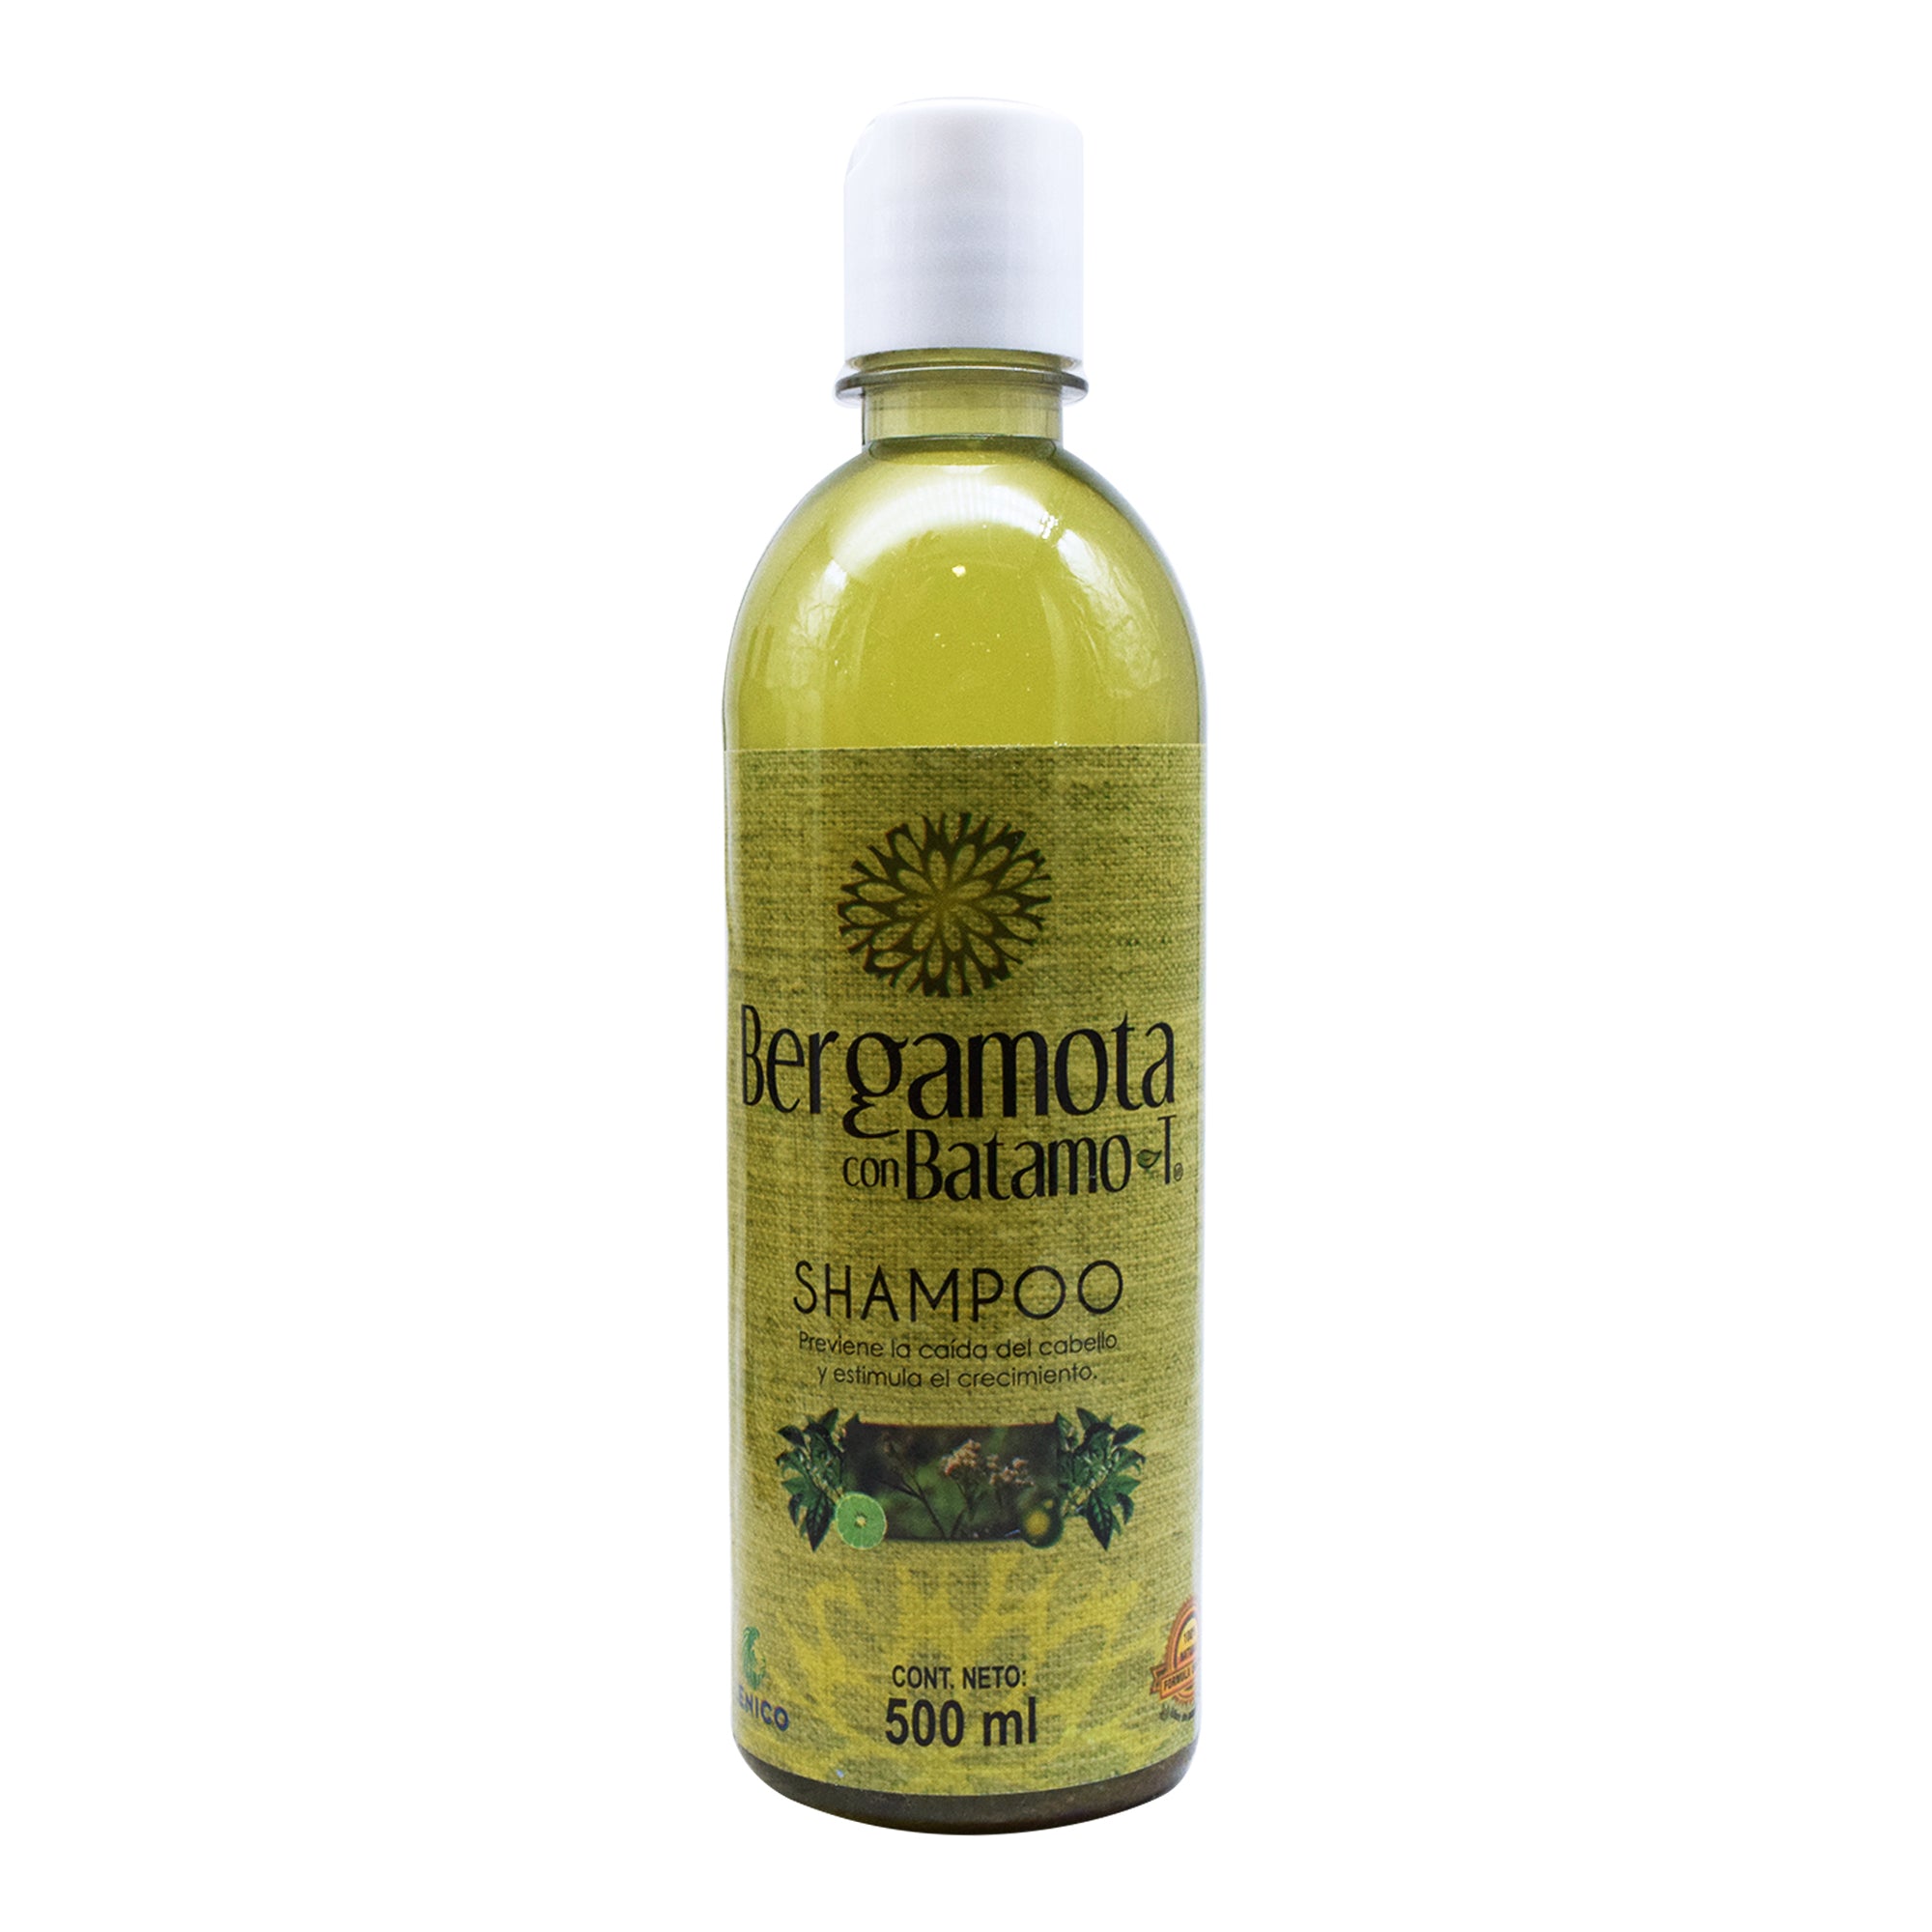 Shampoo bergamota con batamot 500 ml